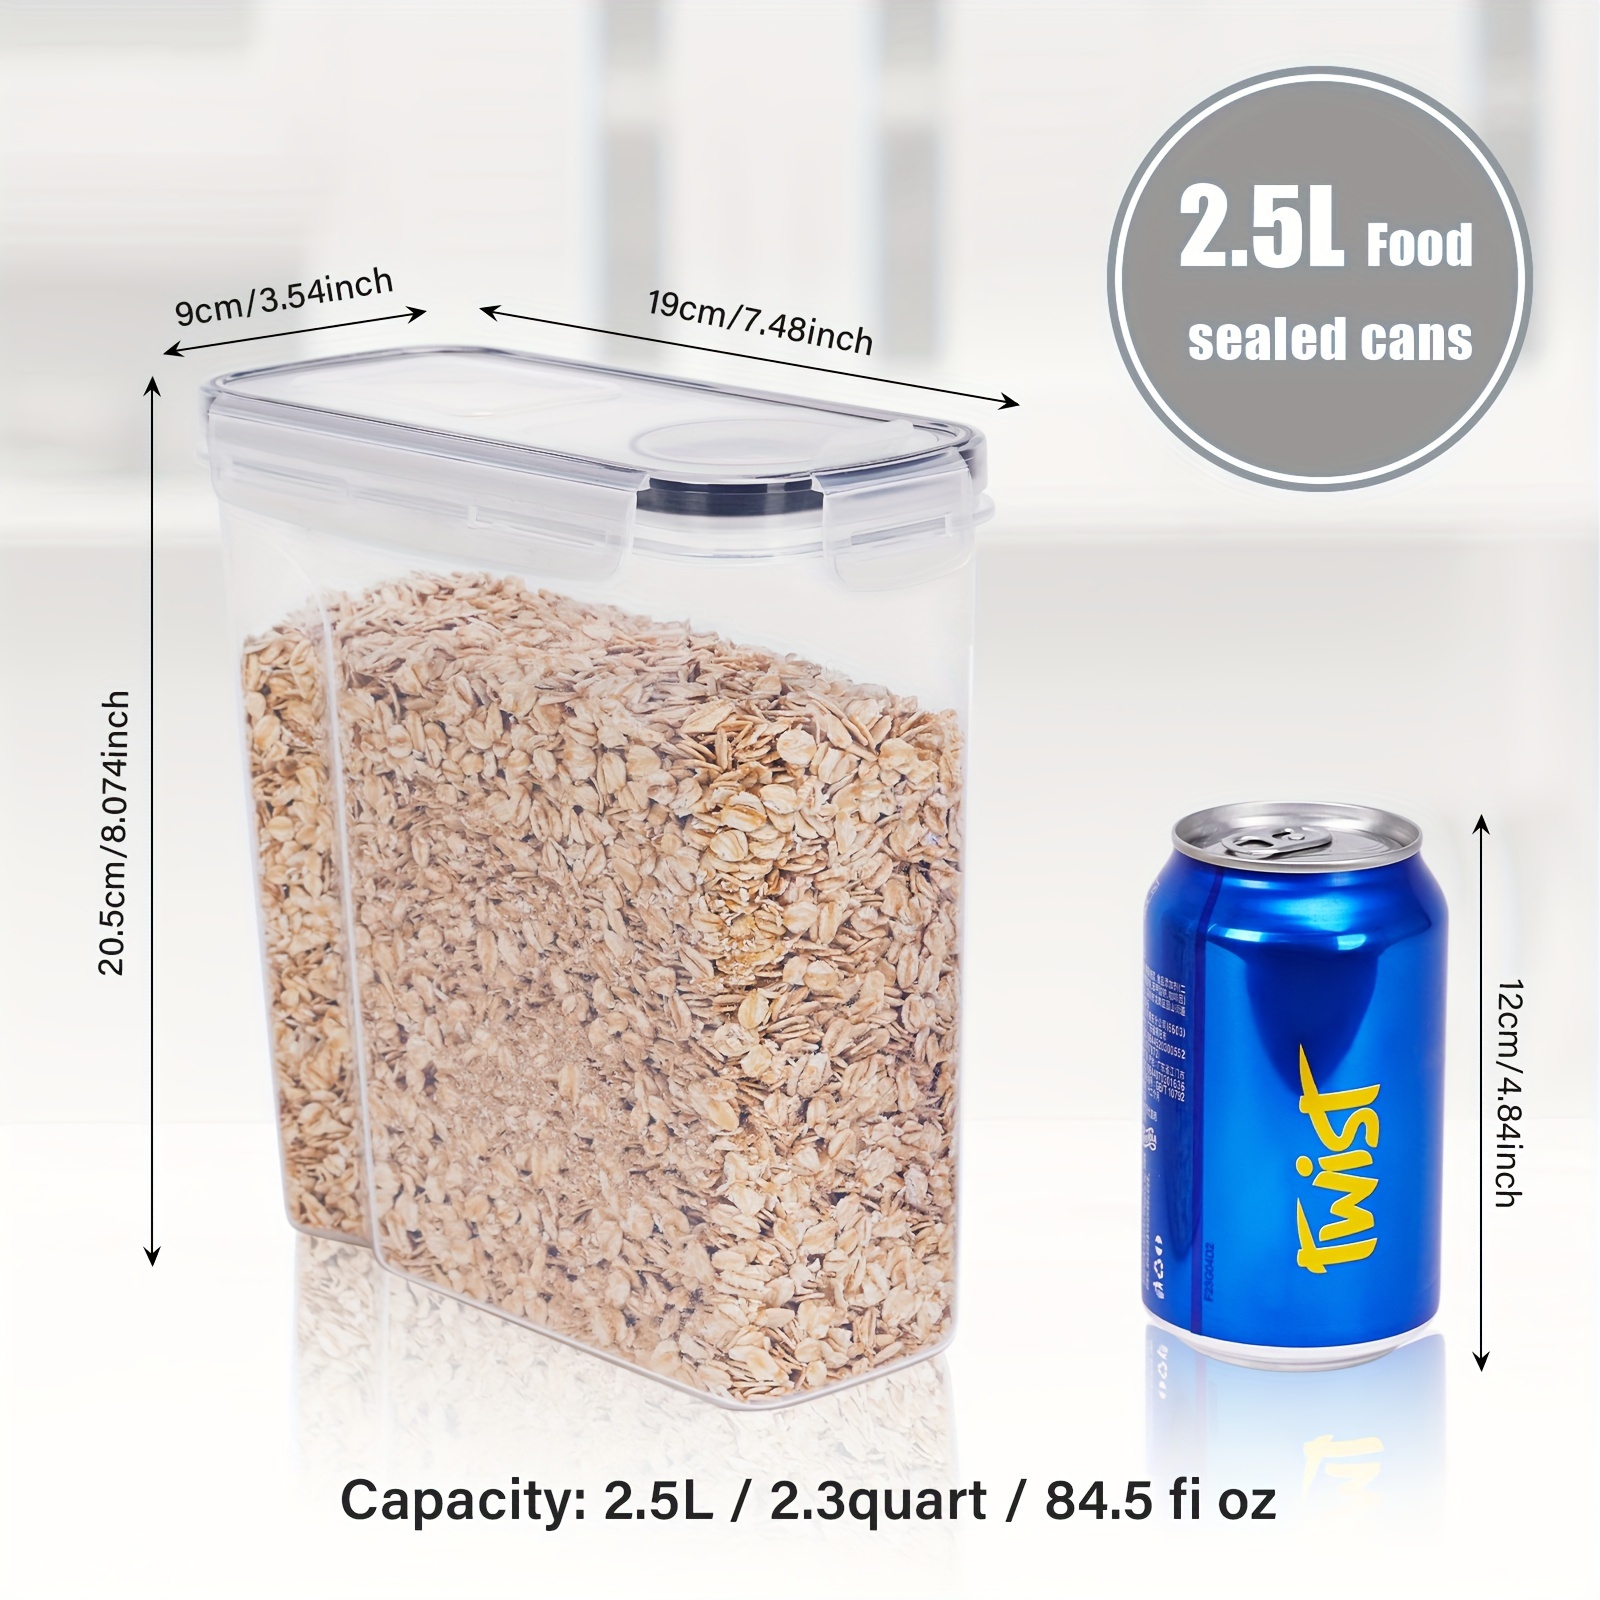 Food Storage Container 4L/135.2oz - White